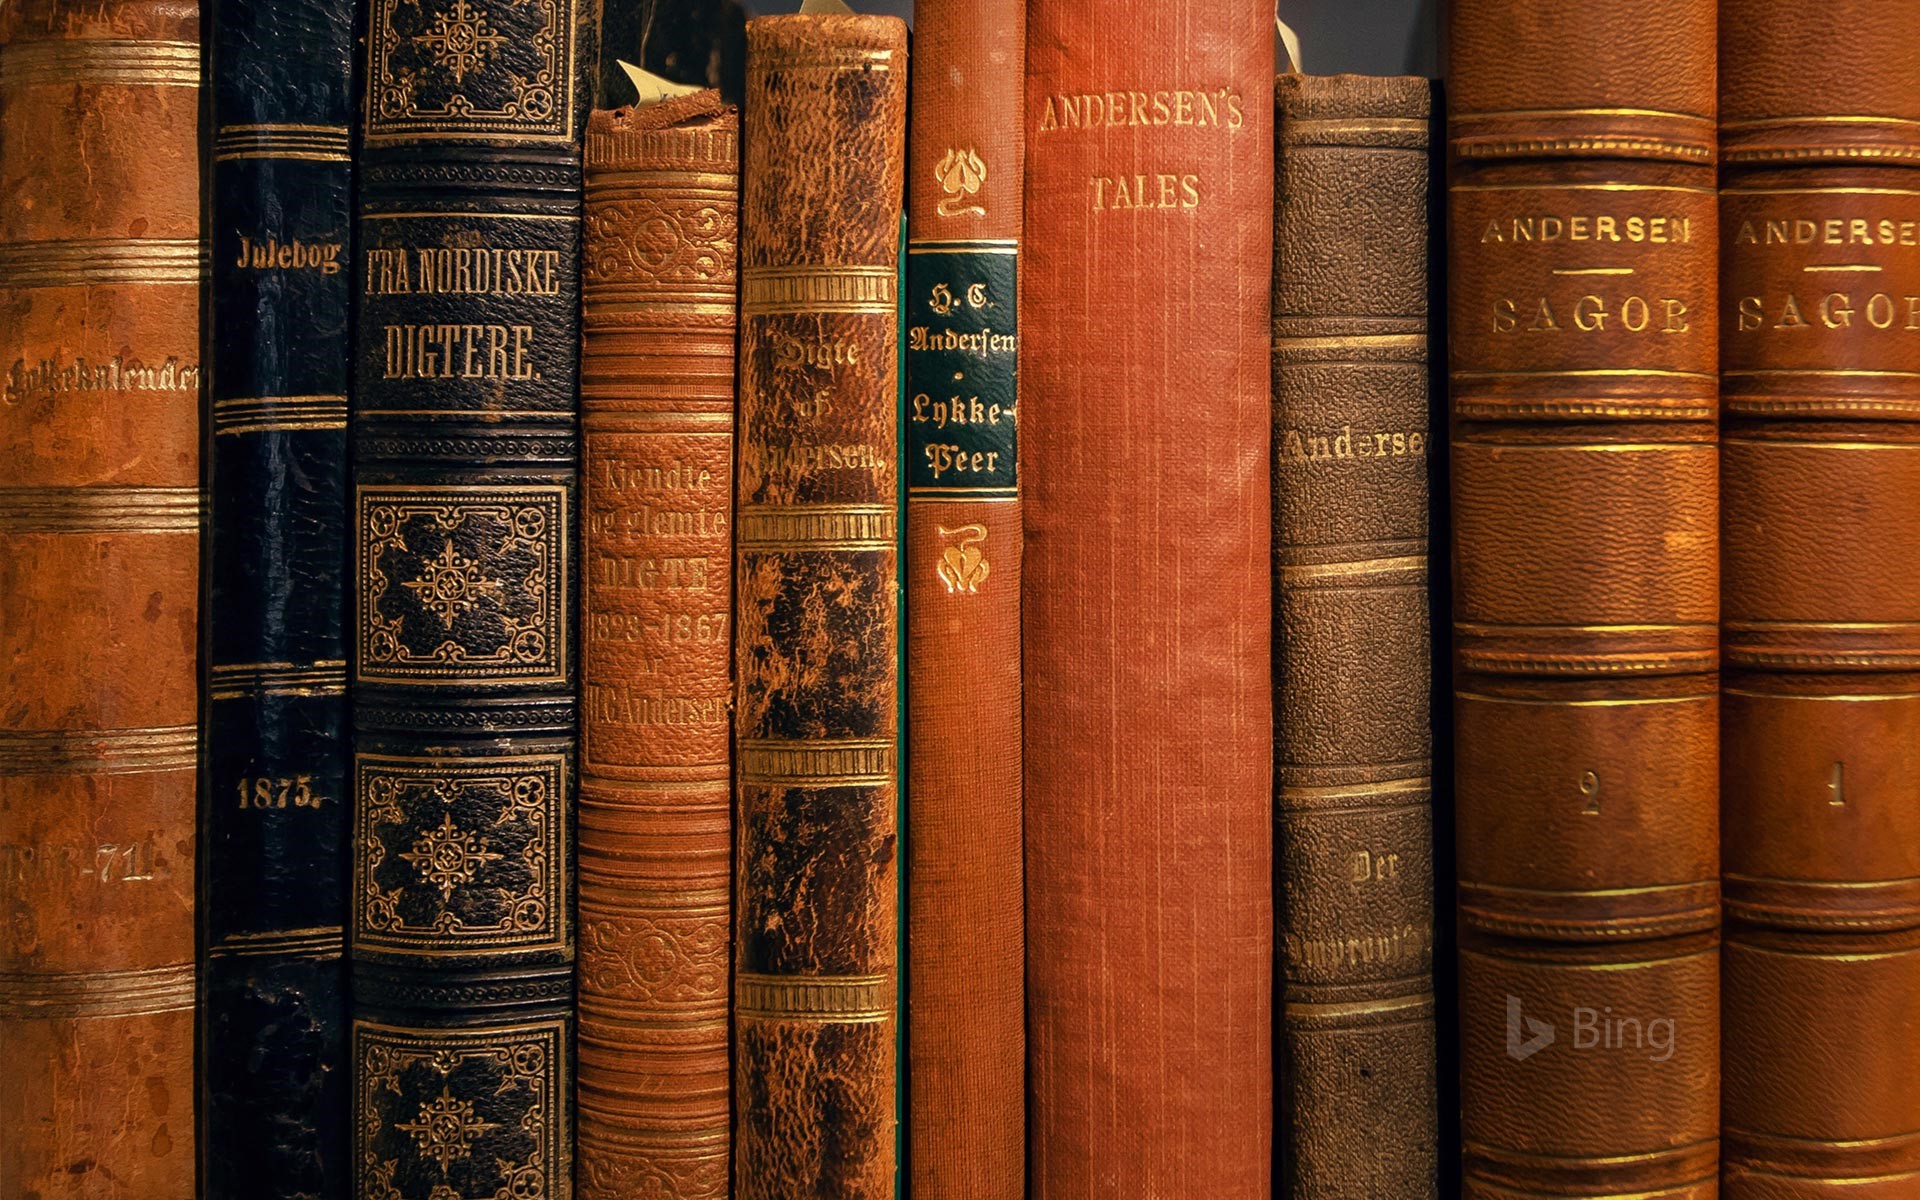 Books by Hans Christian Andersen